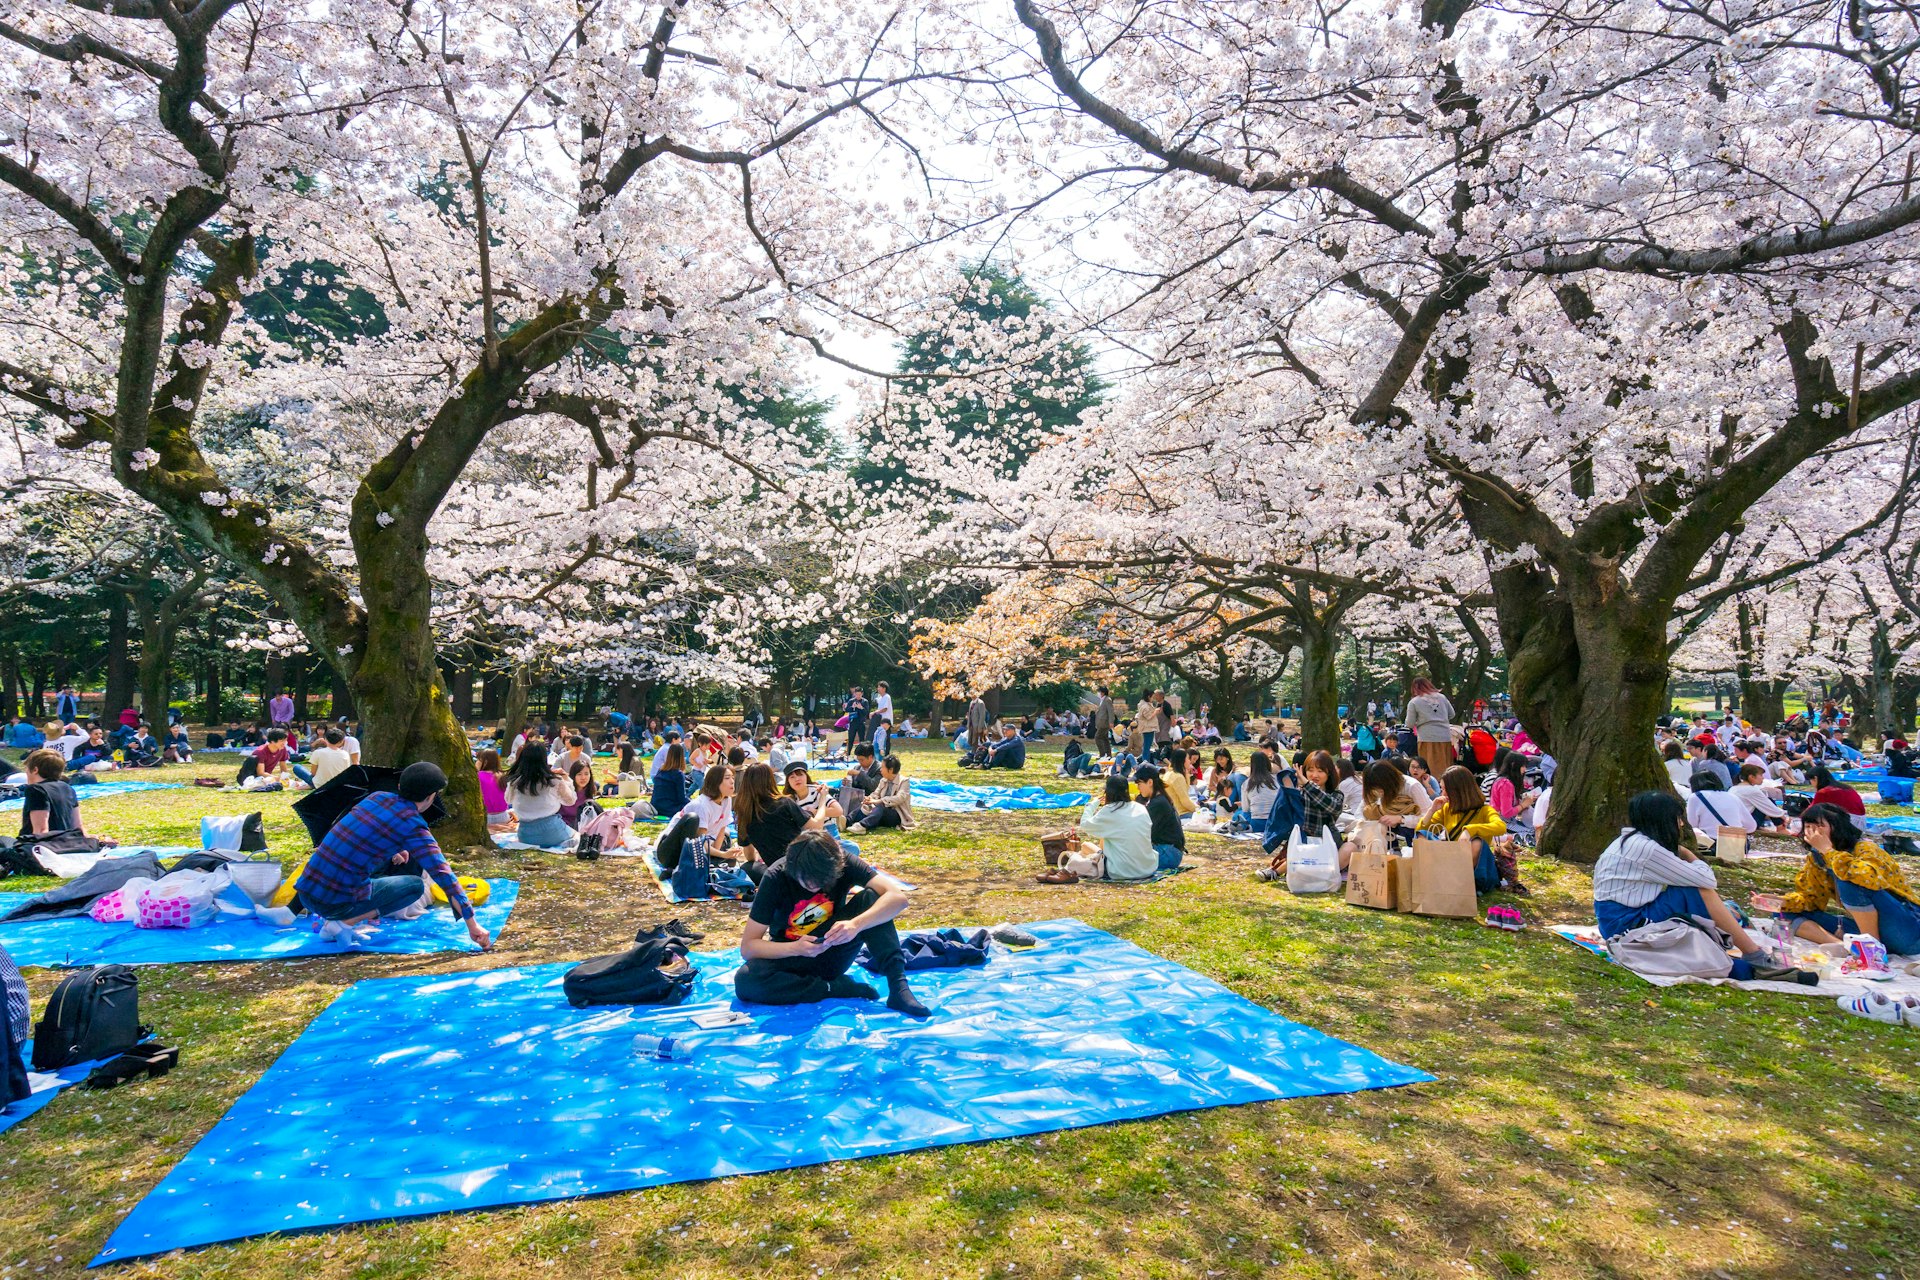 People picnic under cherry blossoms at Yoyogi Park in Shibuya